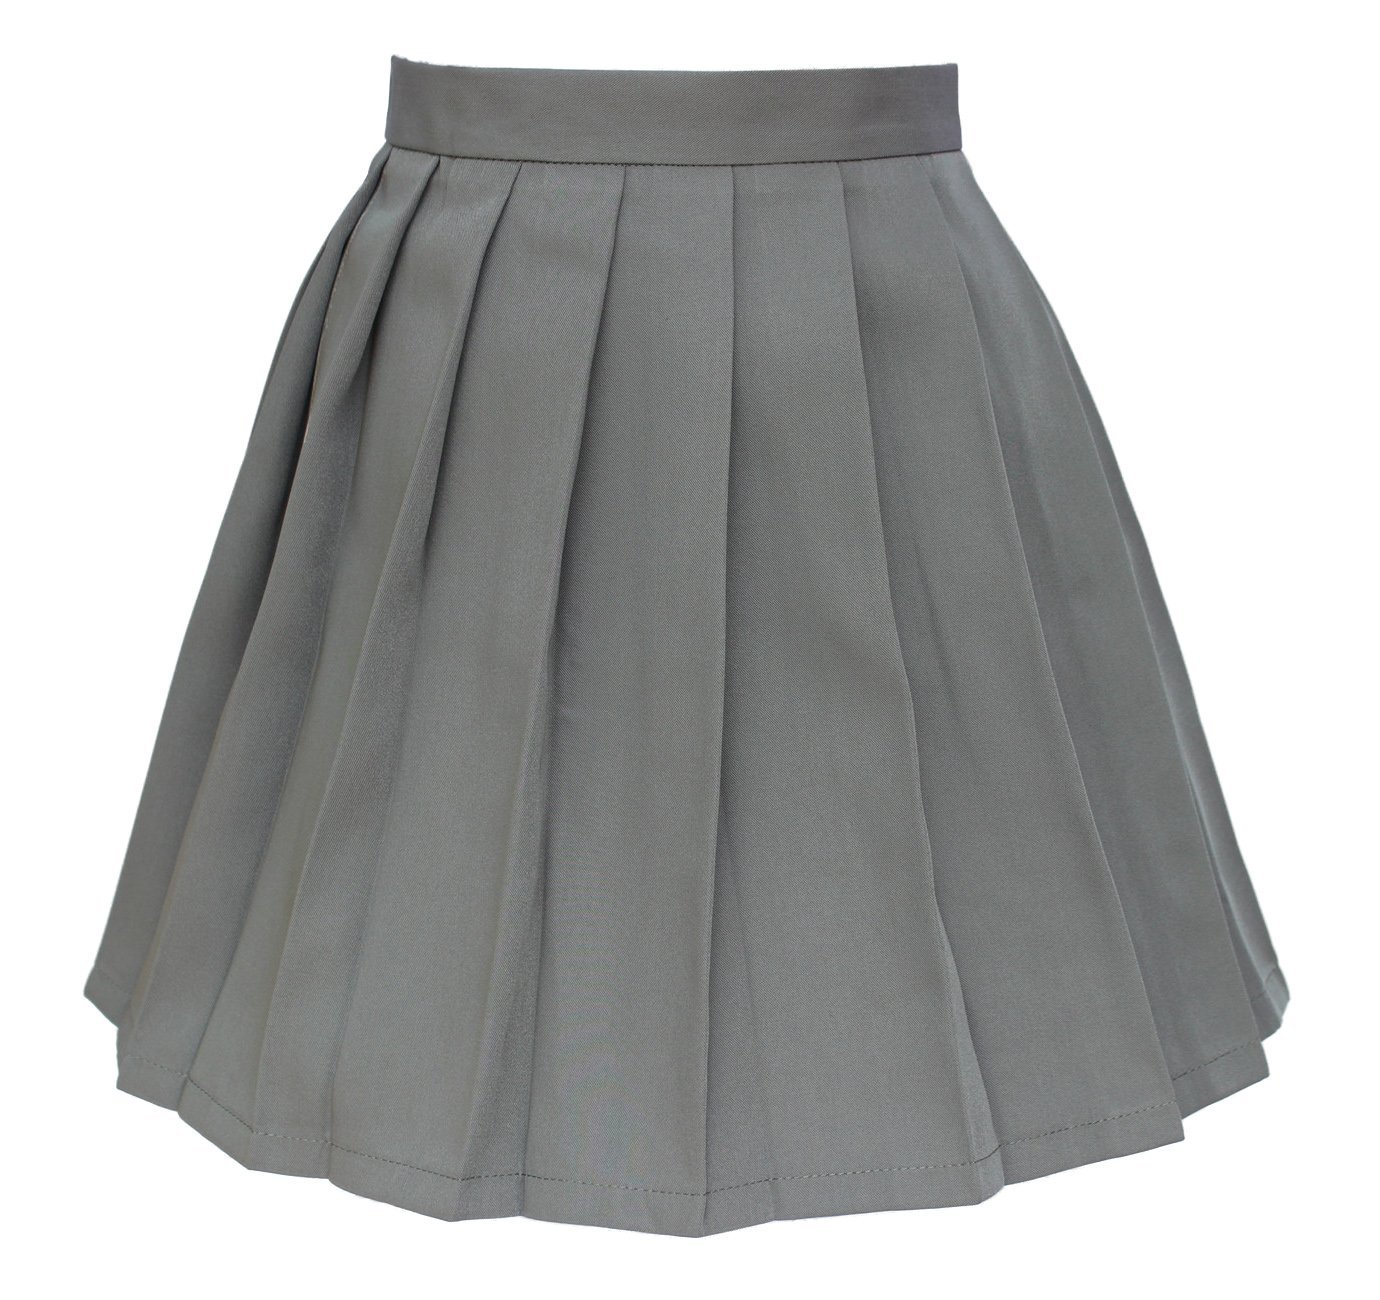 Girl's Japan School Plain Solid Pleated Costumes Skirts (M,Dark grey )